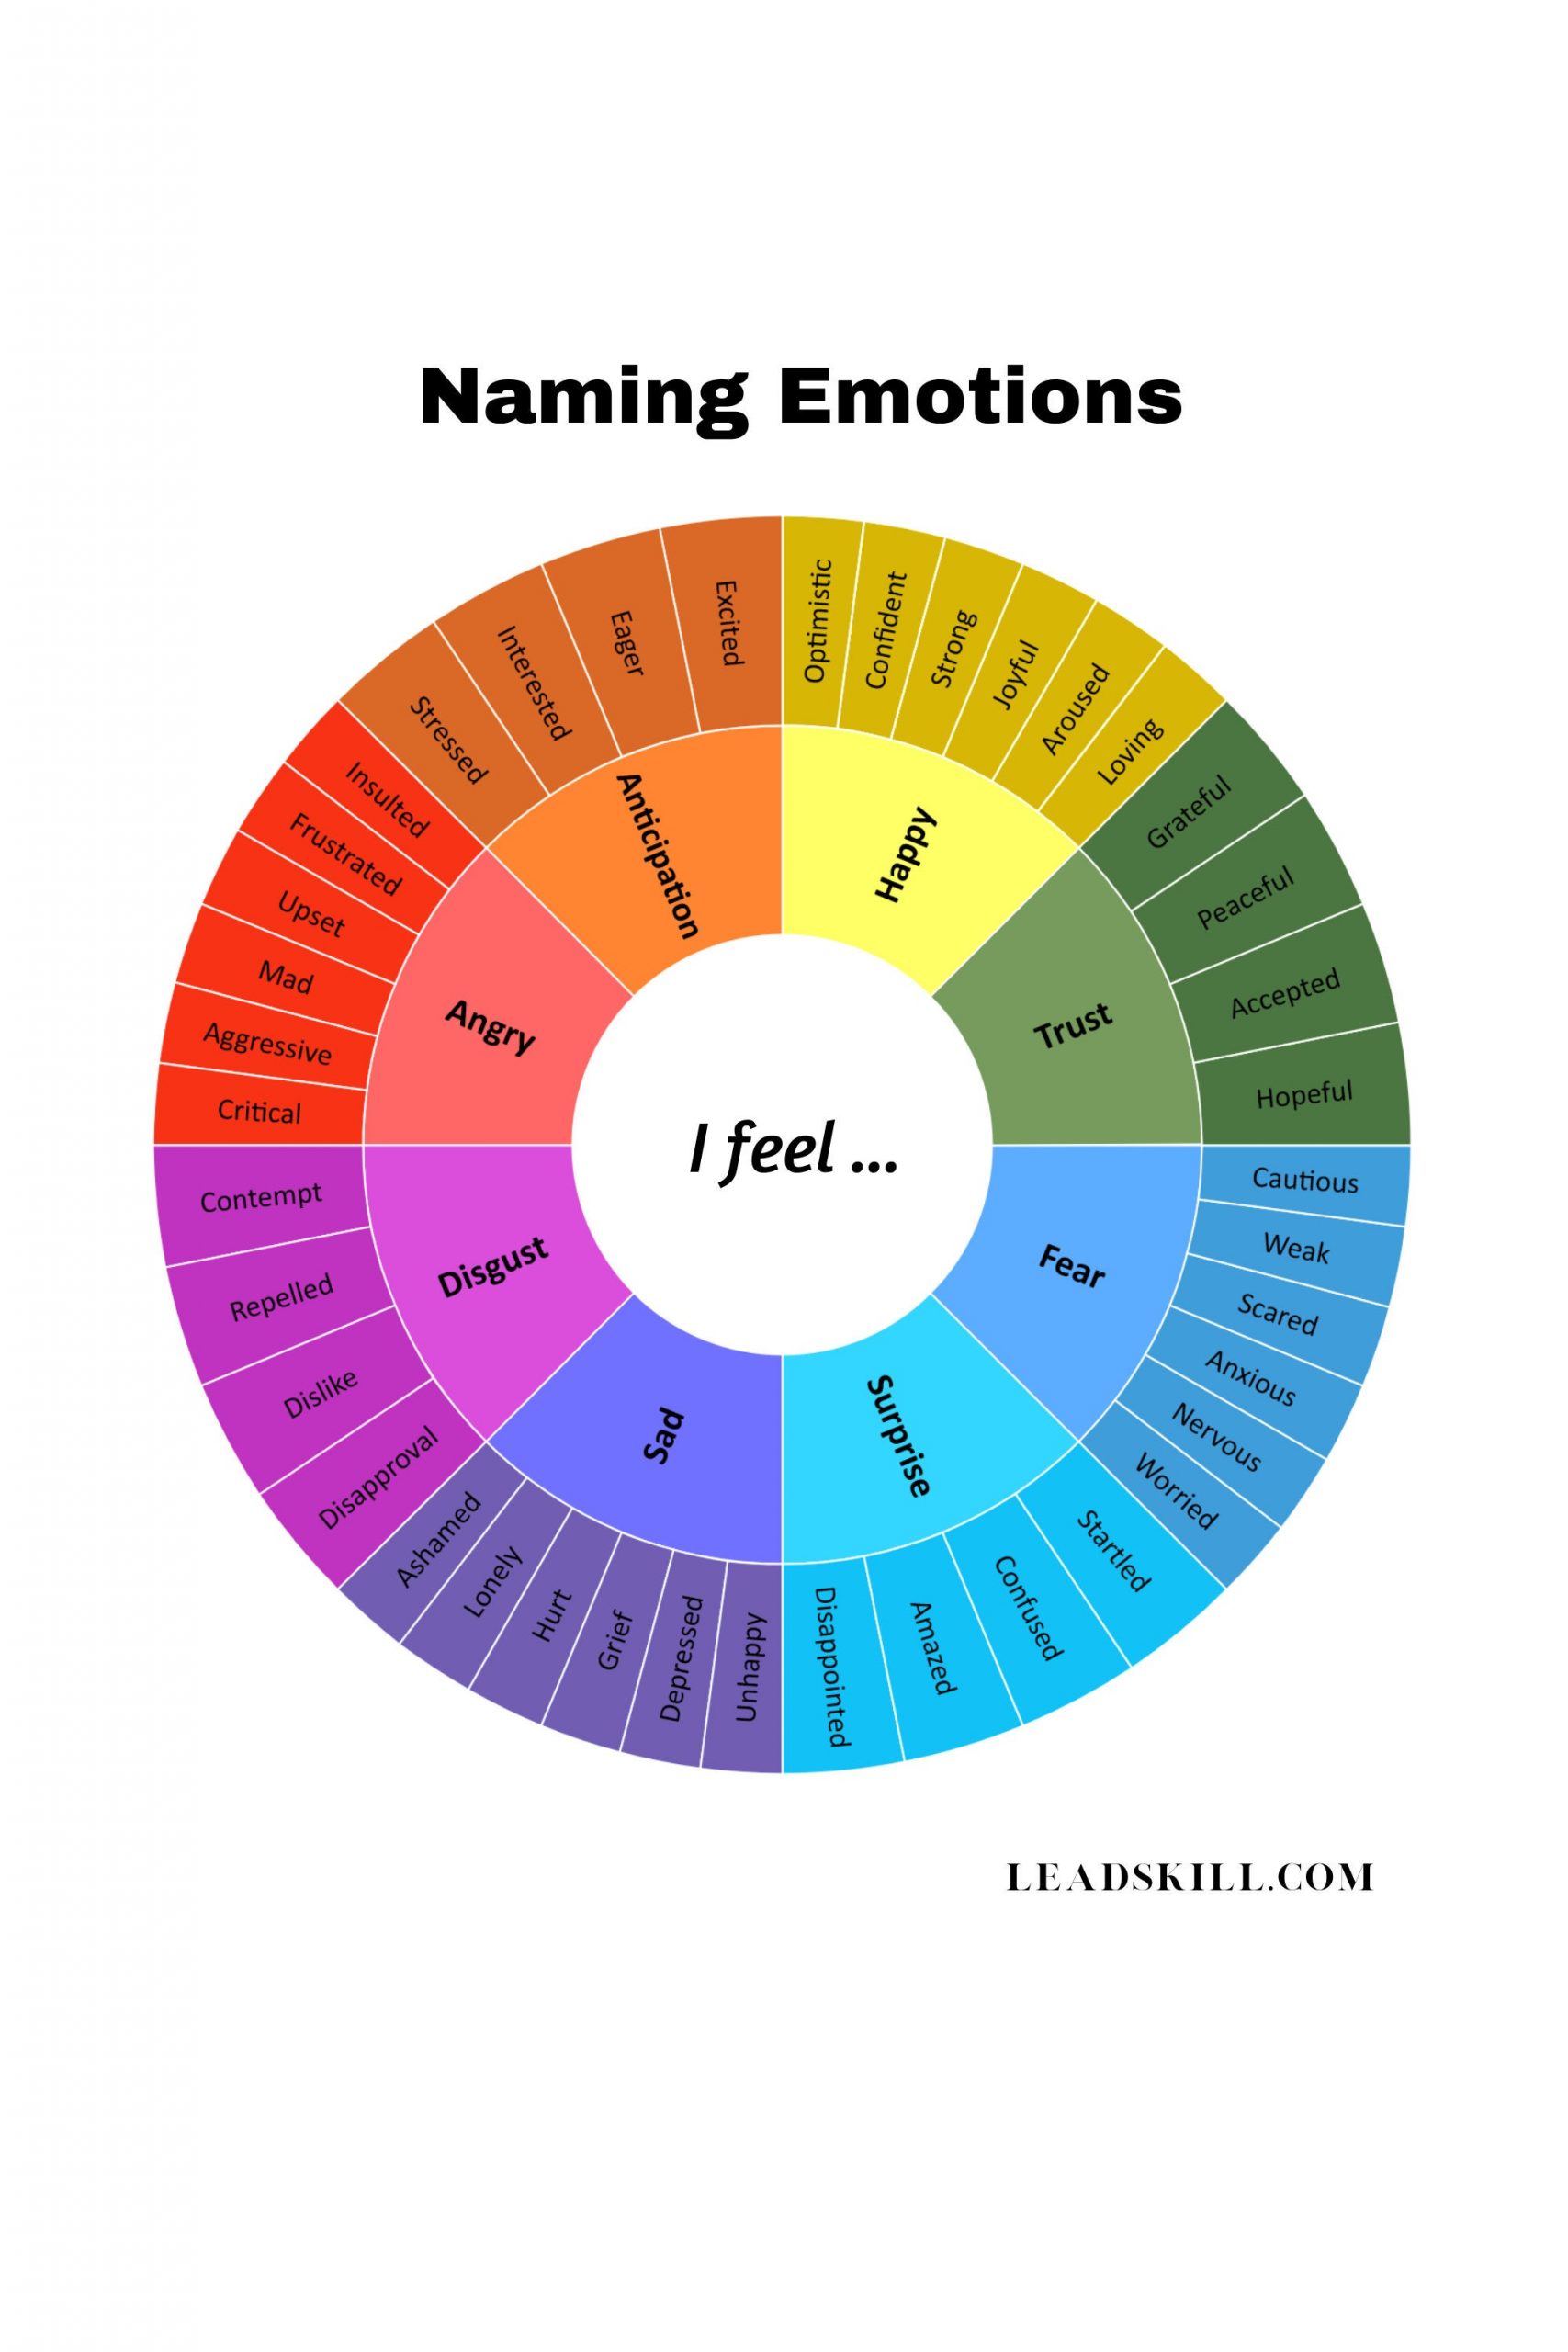 EMOTIONS WHEEL | 128 Emotions for Naming Feelings | Digital Download